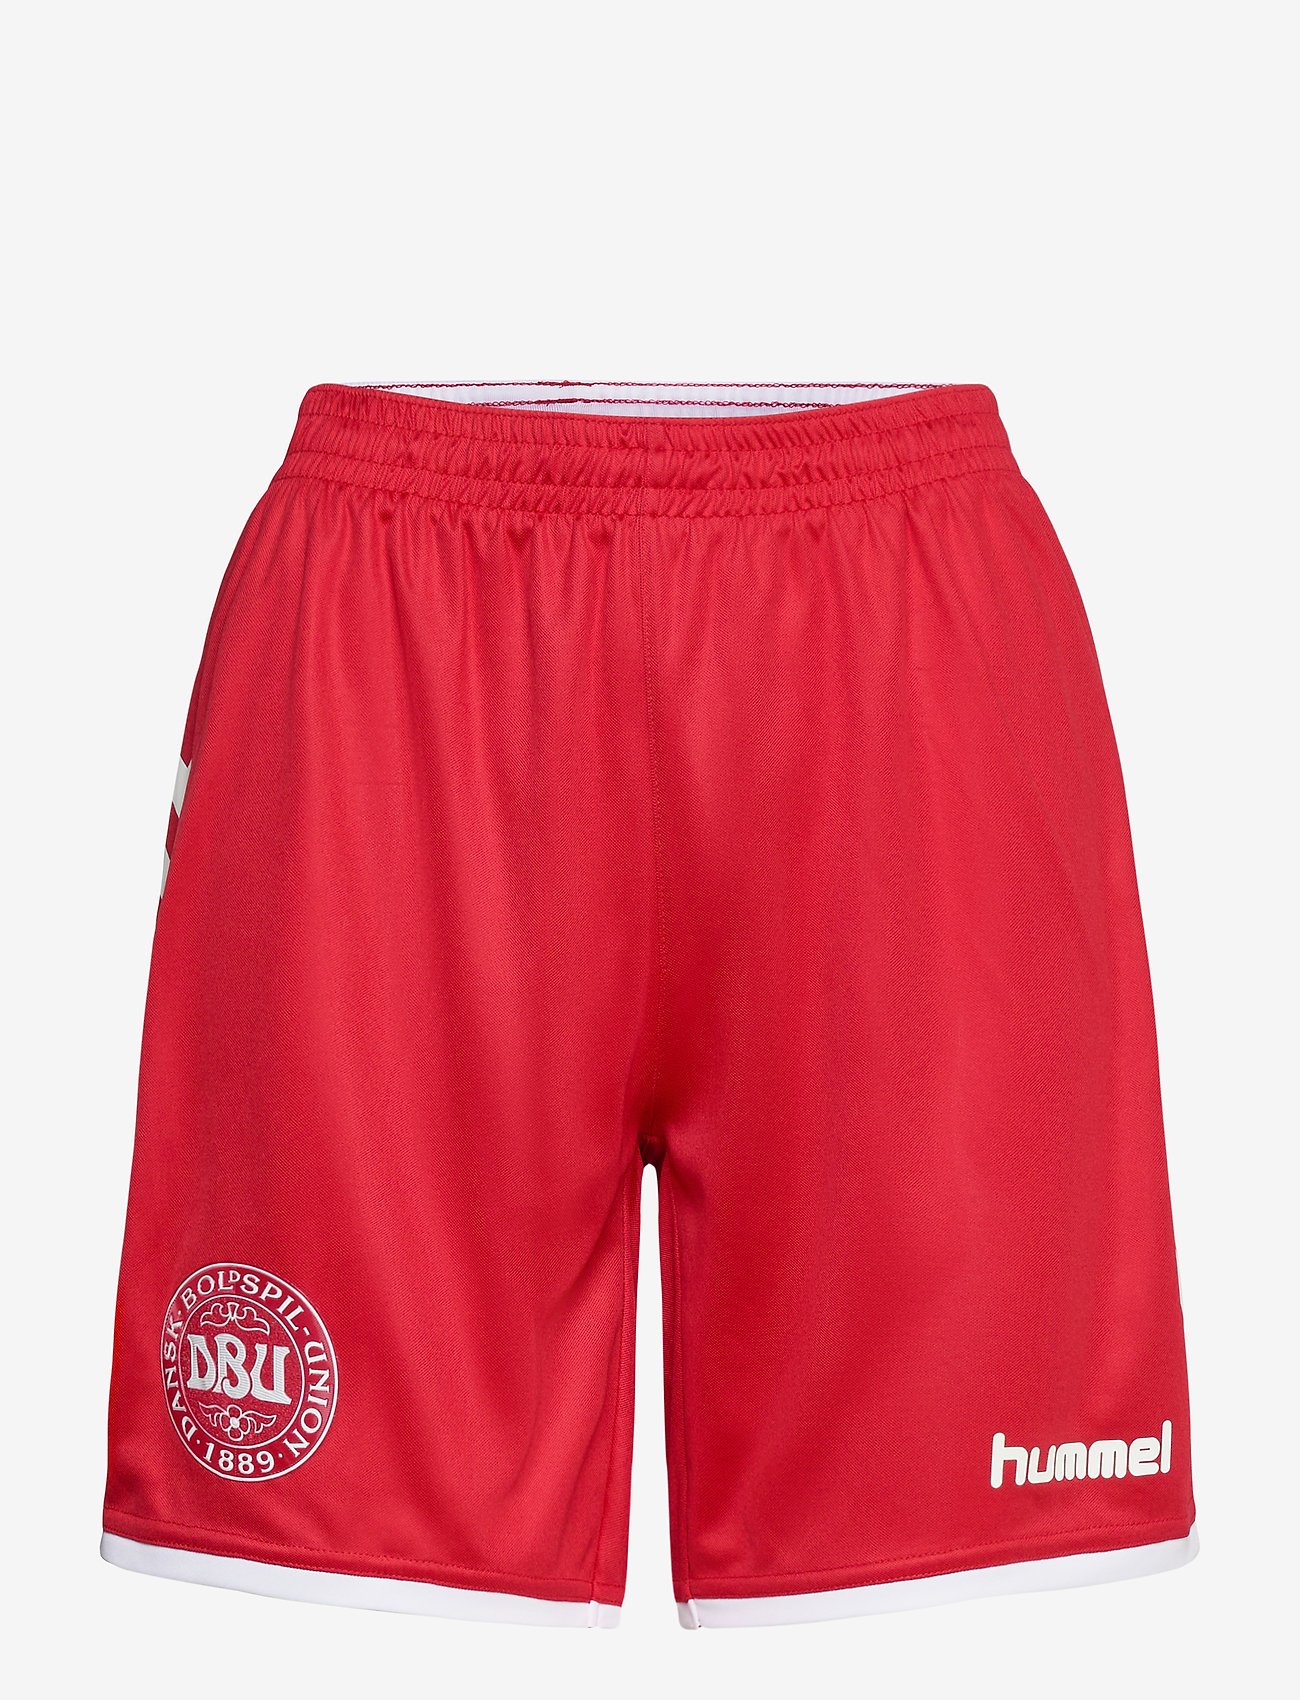 Hummel Dbu Wo Shorts (Tango Red), (167.60 kr) Stort utvalg av outlet-mote | Booztlet.com